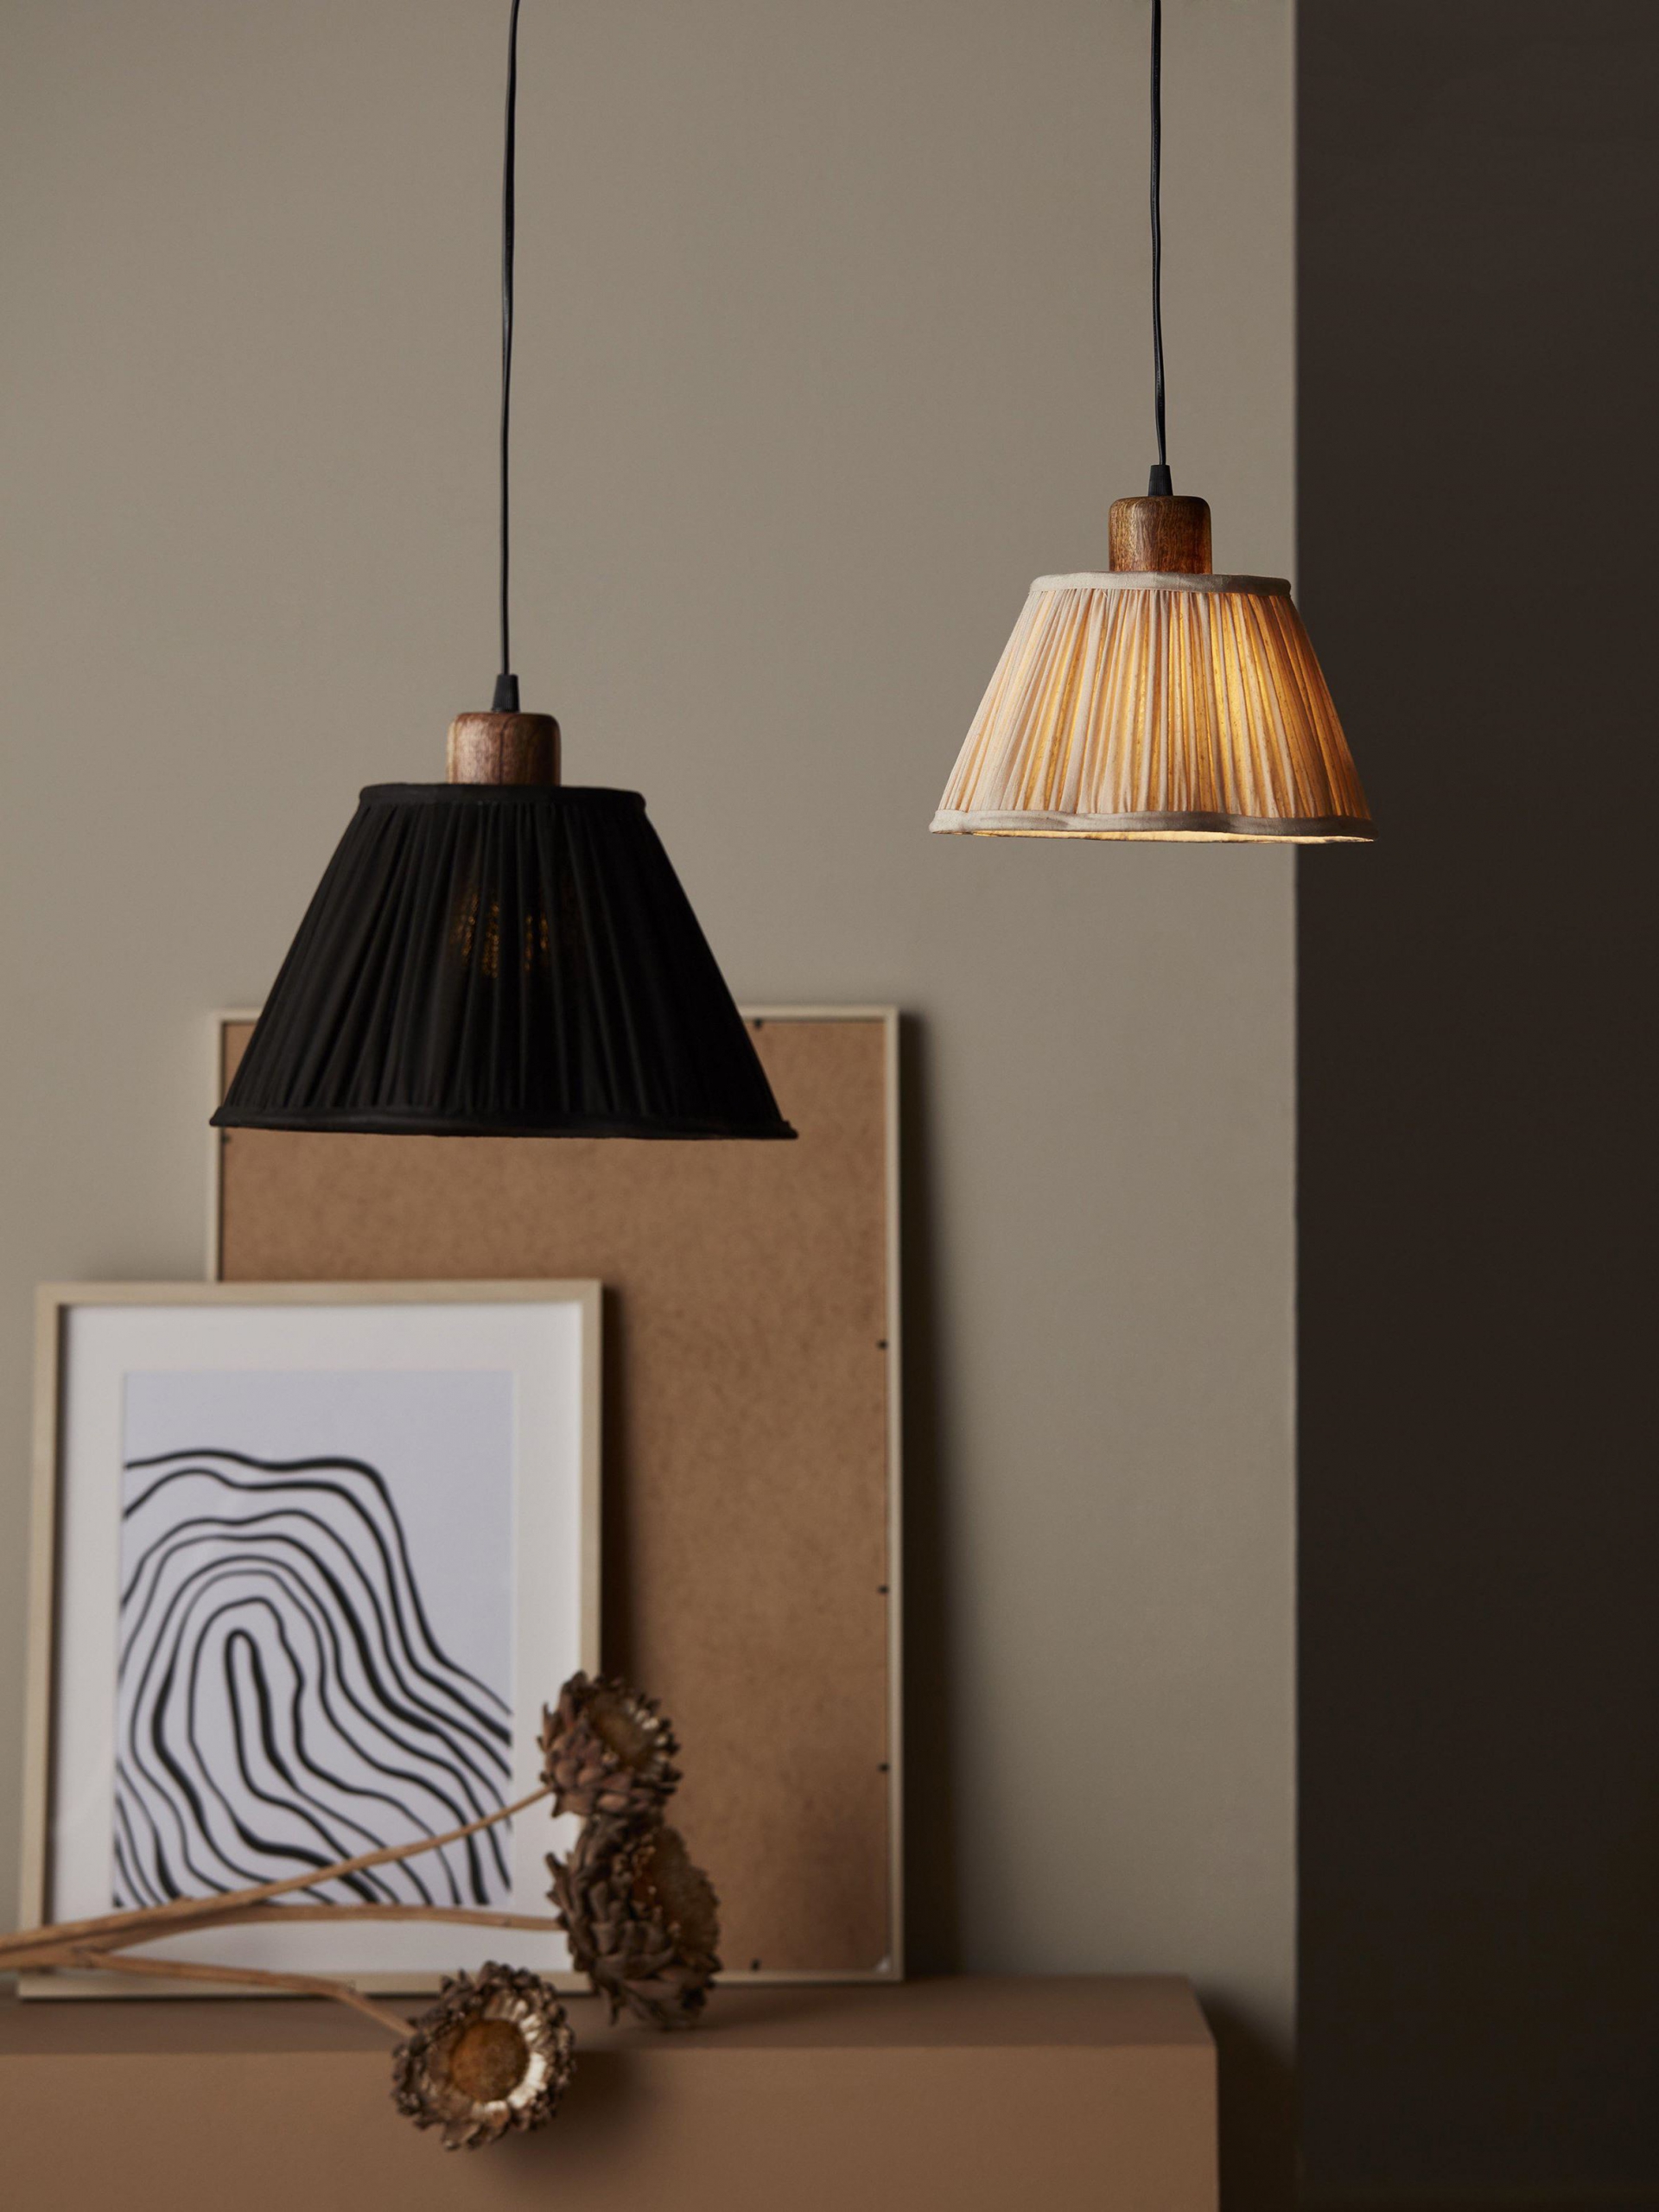 Lampy plisowane retro Siv PR Home w kolorach natury